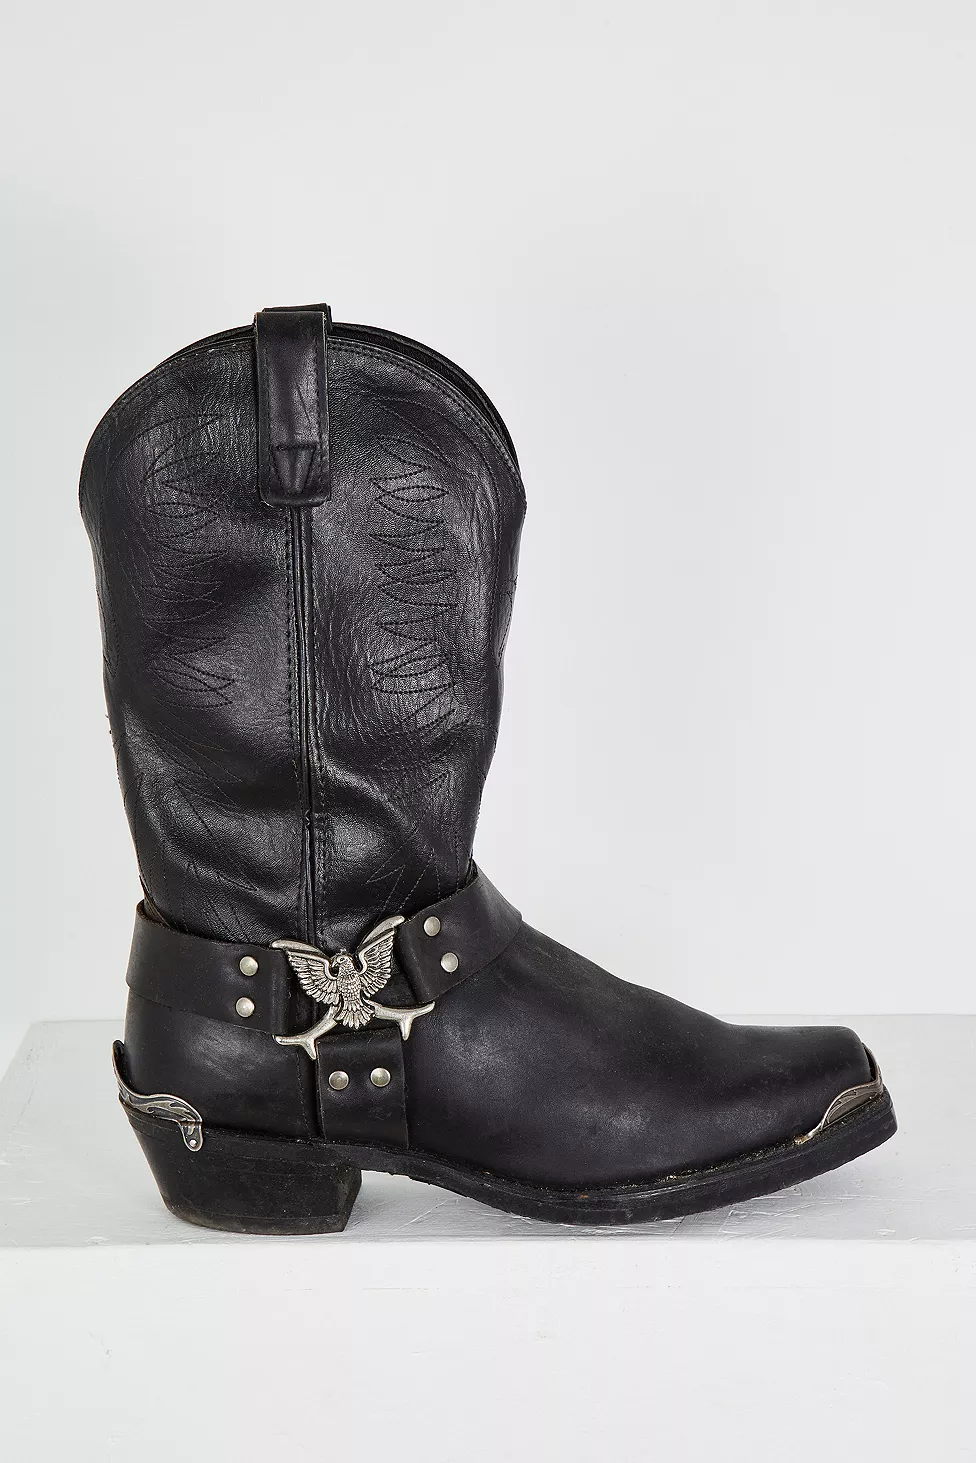 Urban Renewal One-Of-A-Kind Vintage Cowboy Boots